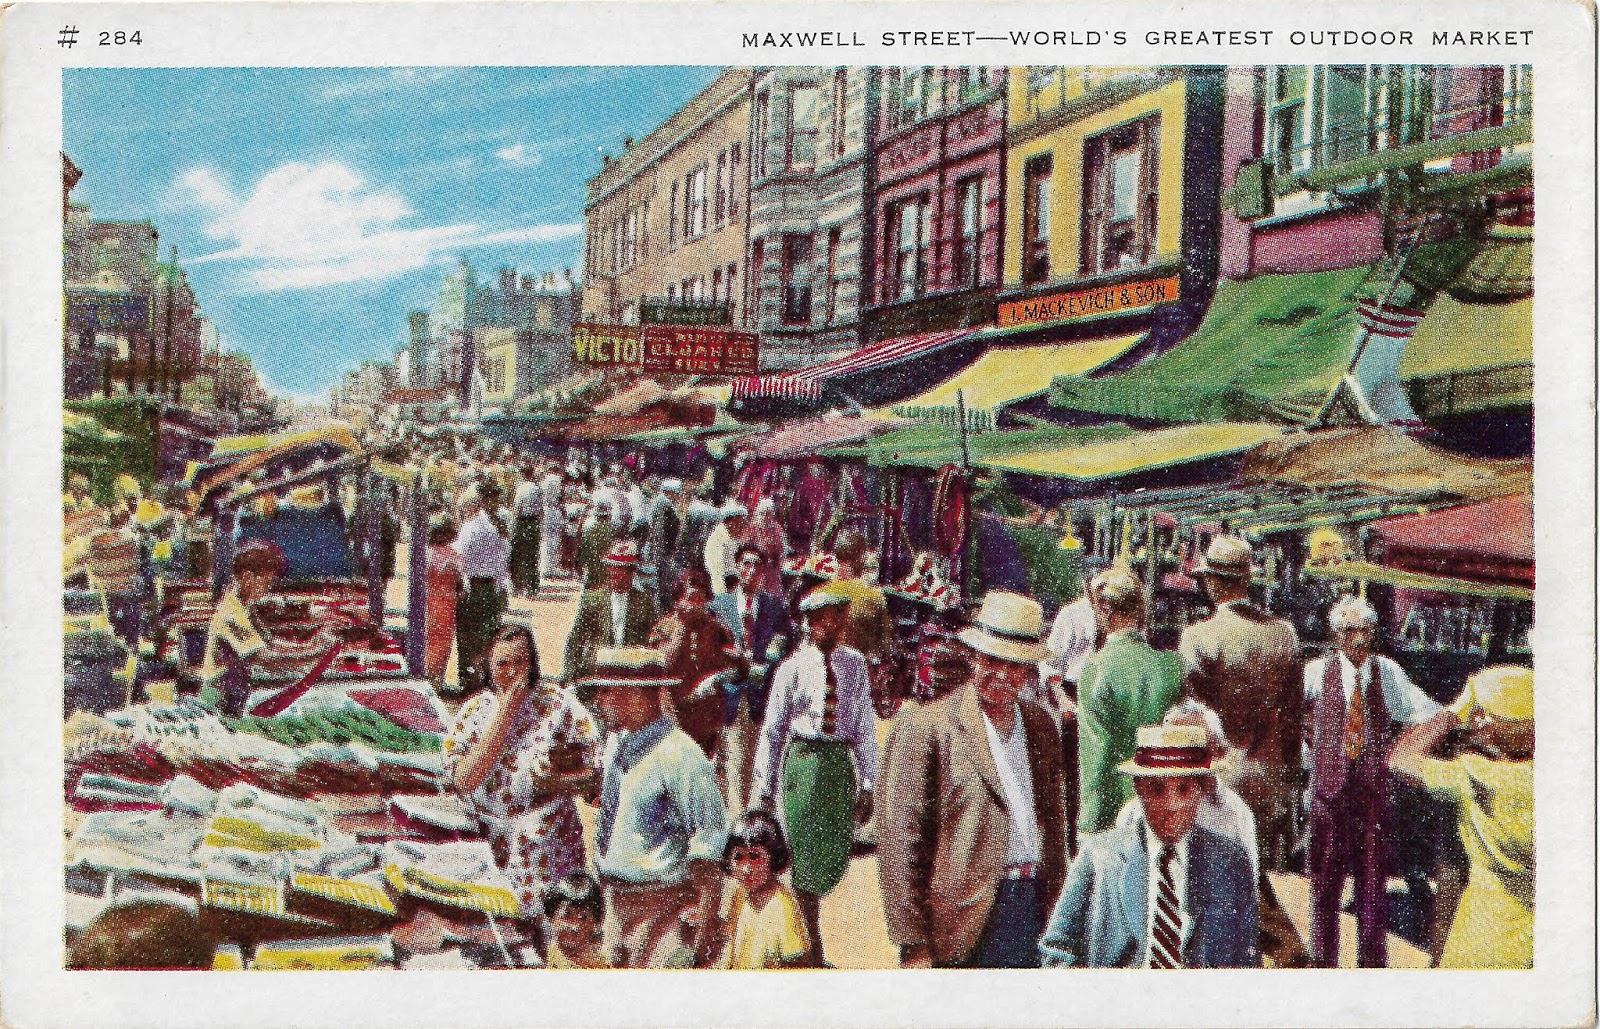 The Maxwell Street Market